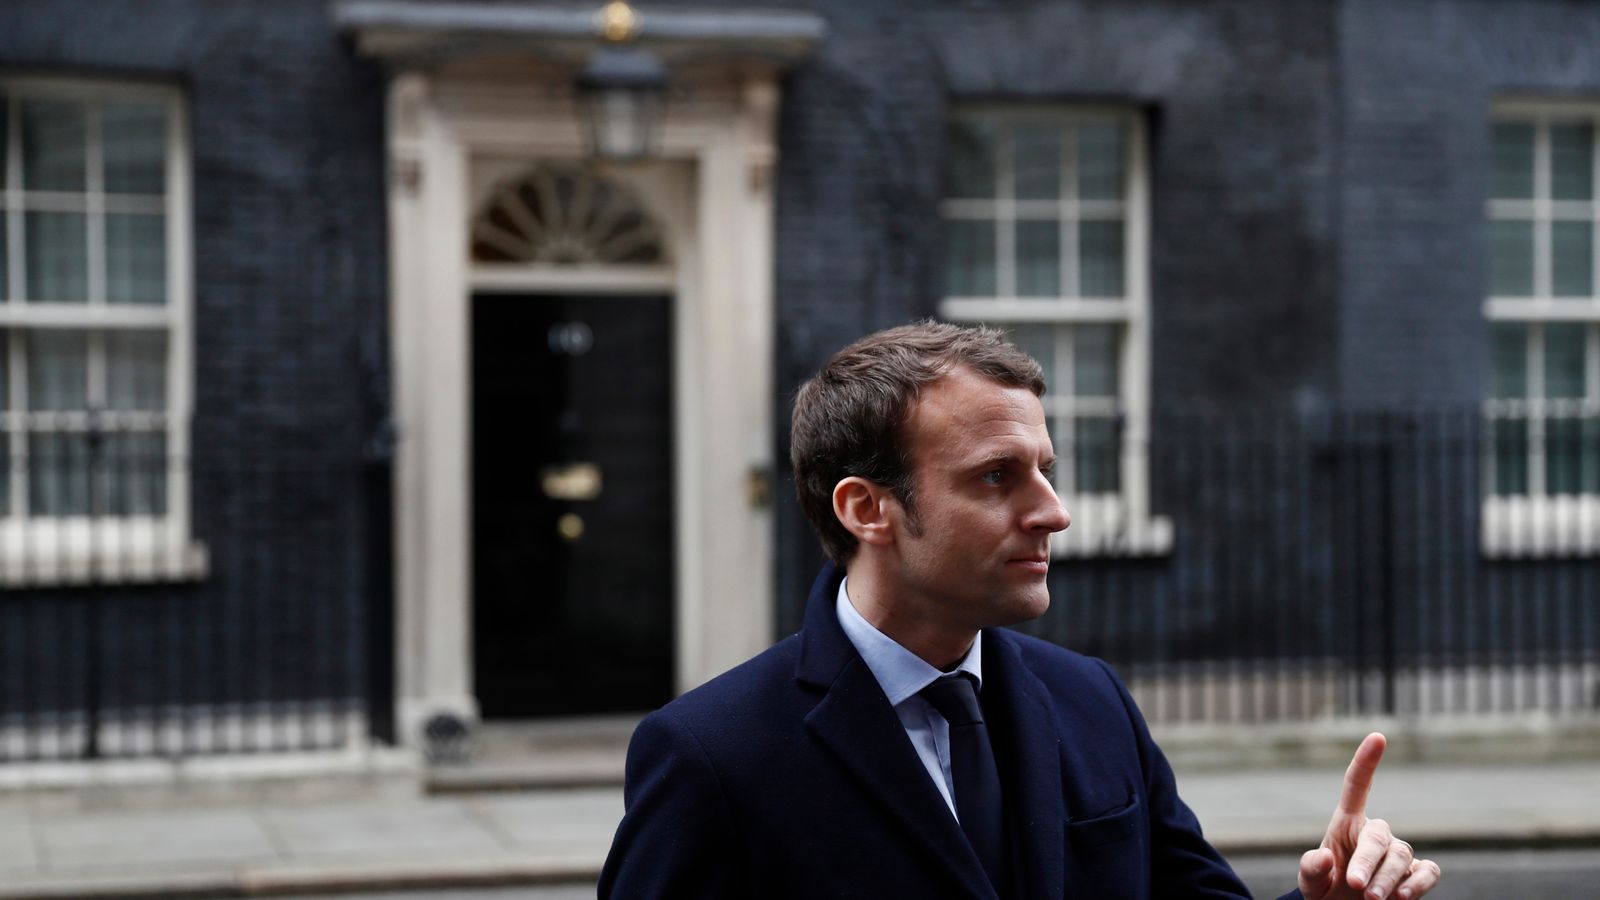 Emmanuel Macron speaks to media outside Number 10